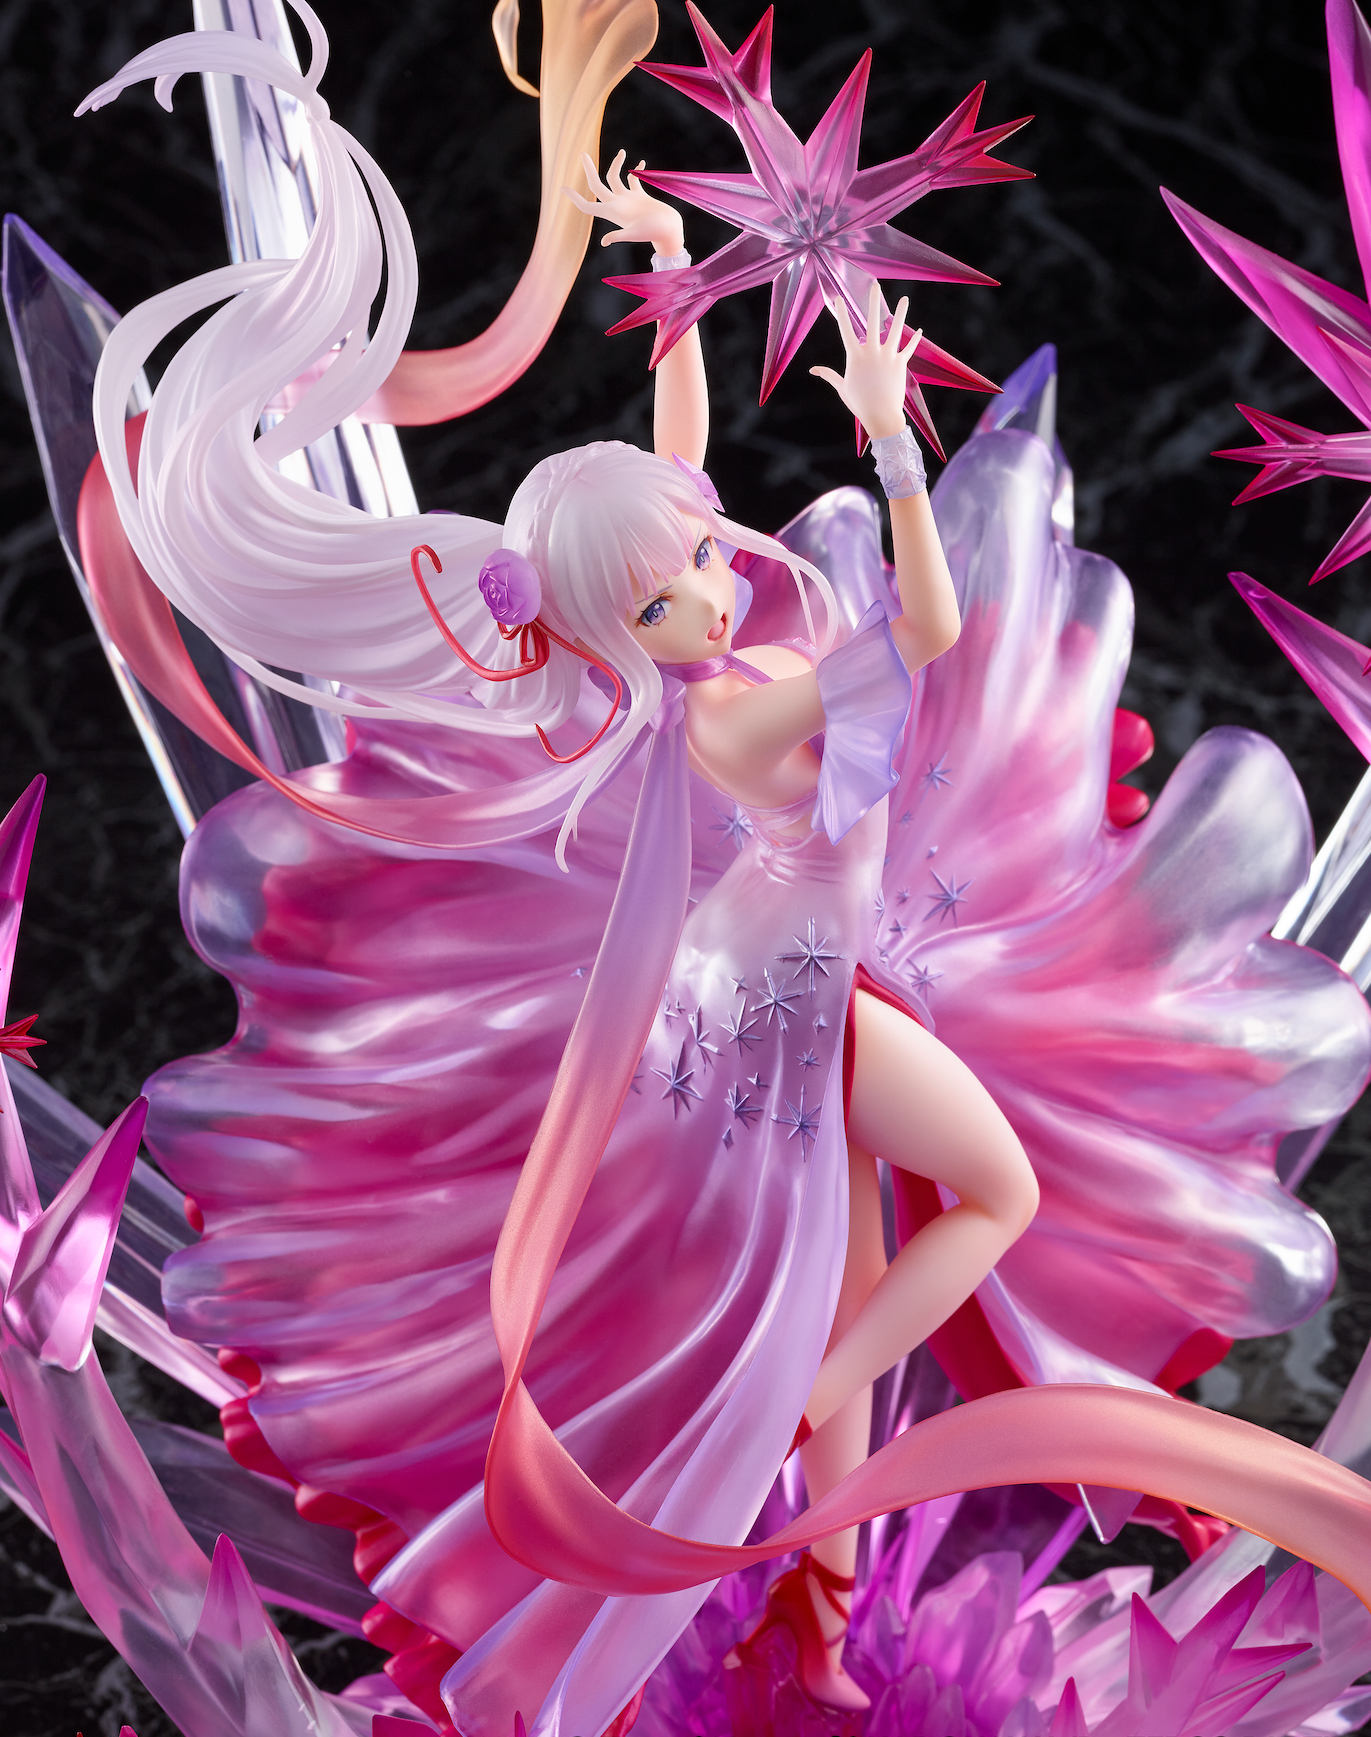 Re:Zero - Frozen Emilia 1/7 Scale Figure (Crystal Dress Ver.) image count 1